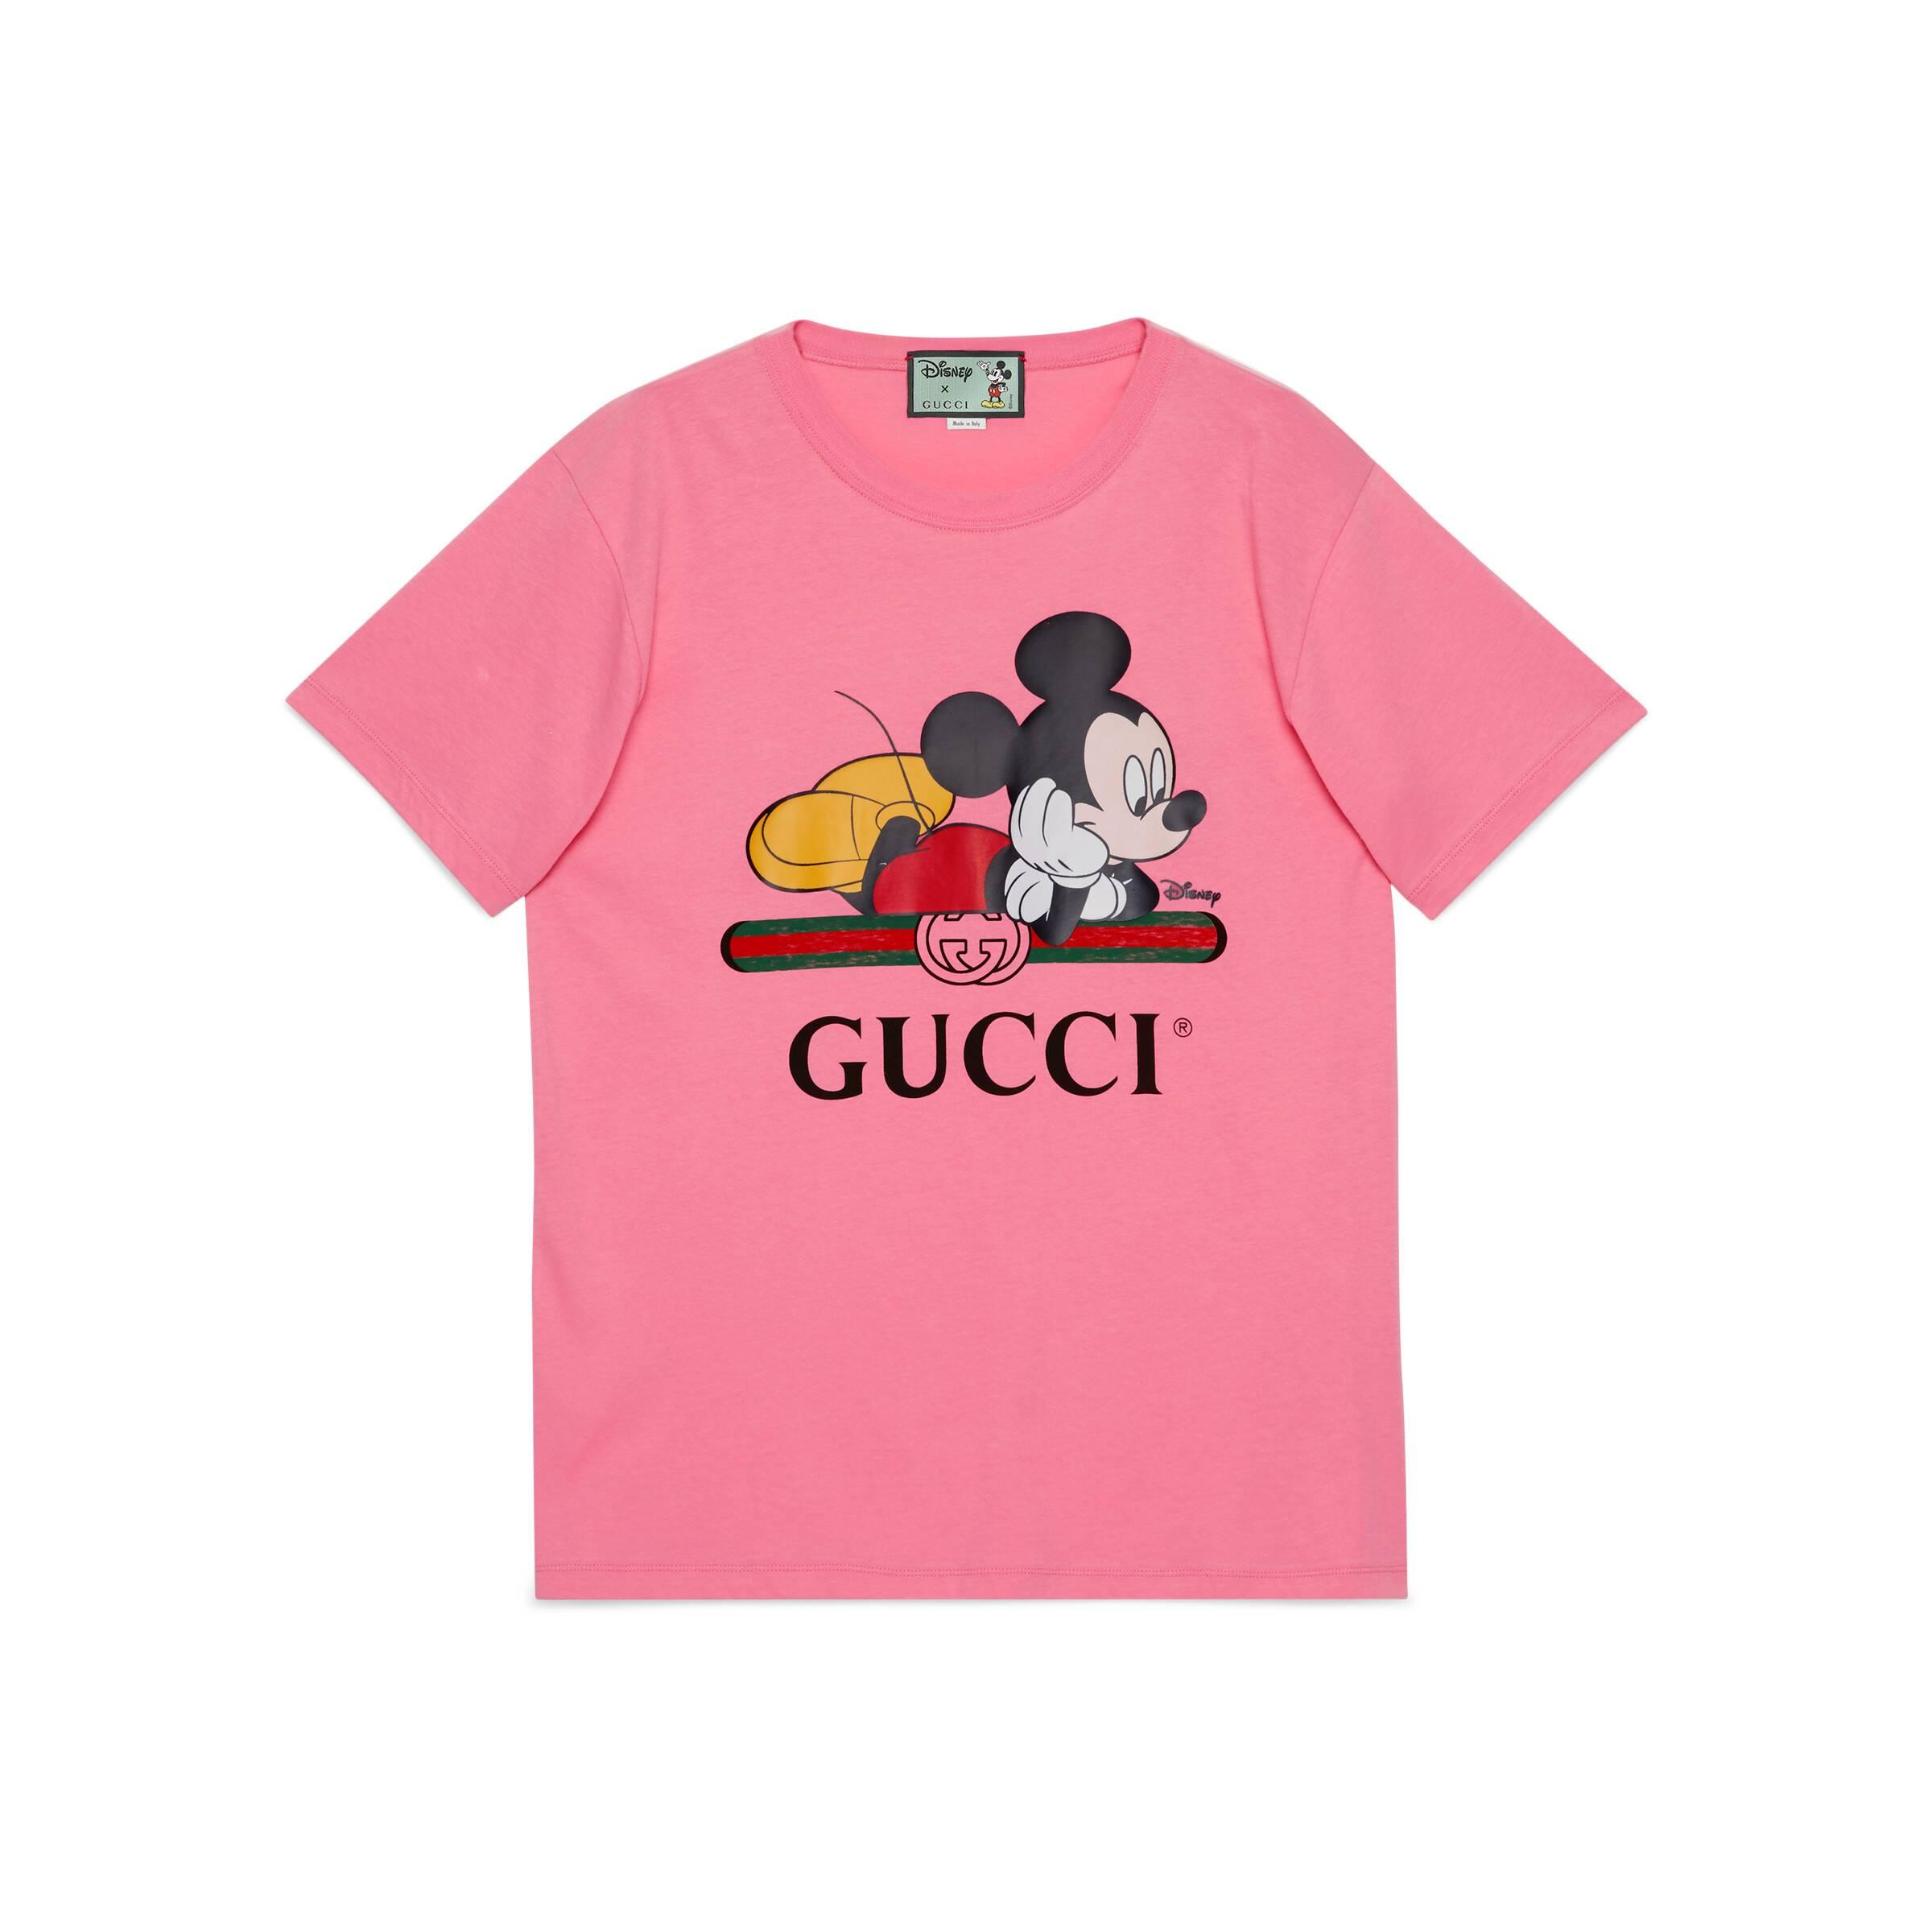 Gucci Disney X Oversize T-shirt in Pink | Lyst Australia